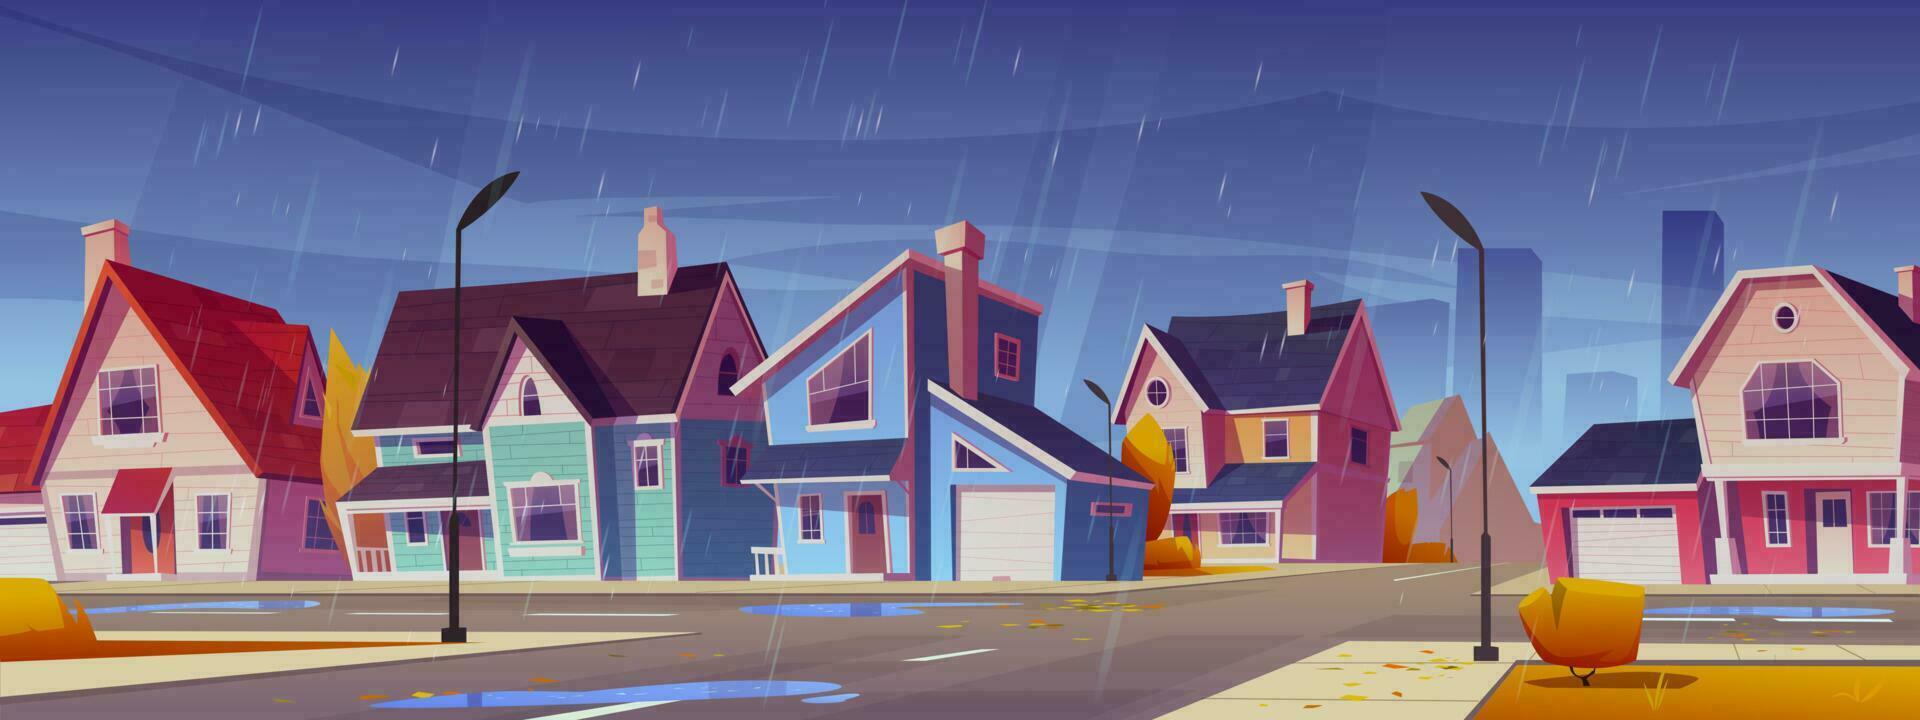 Town suburban neighborhood with houses in rain vector